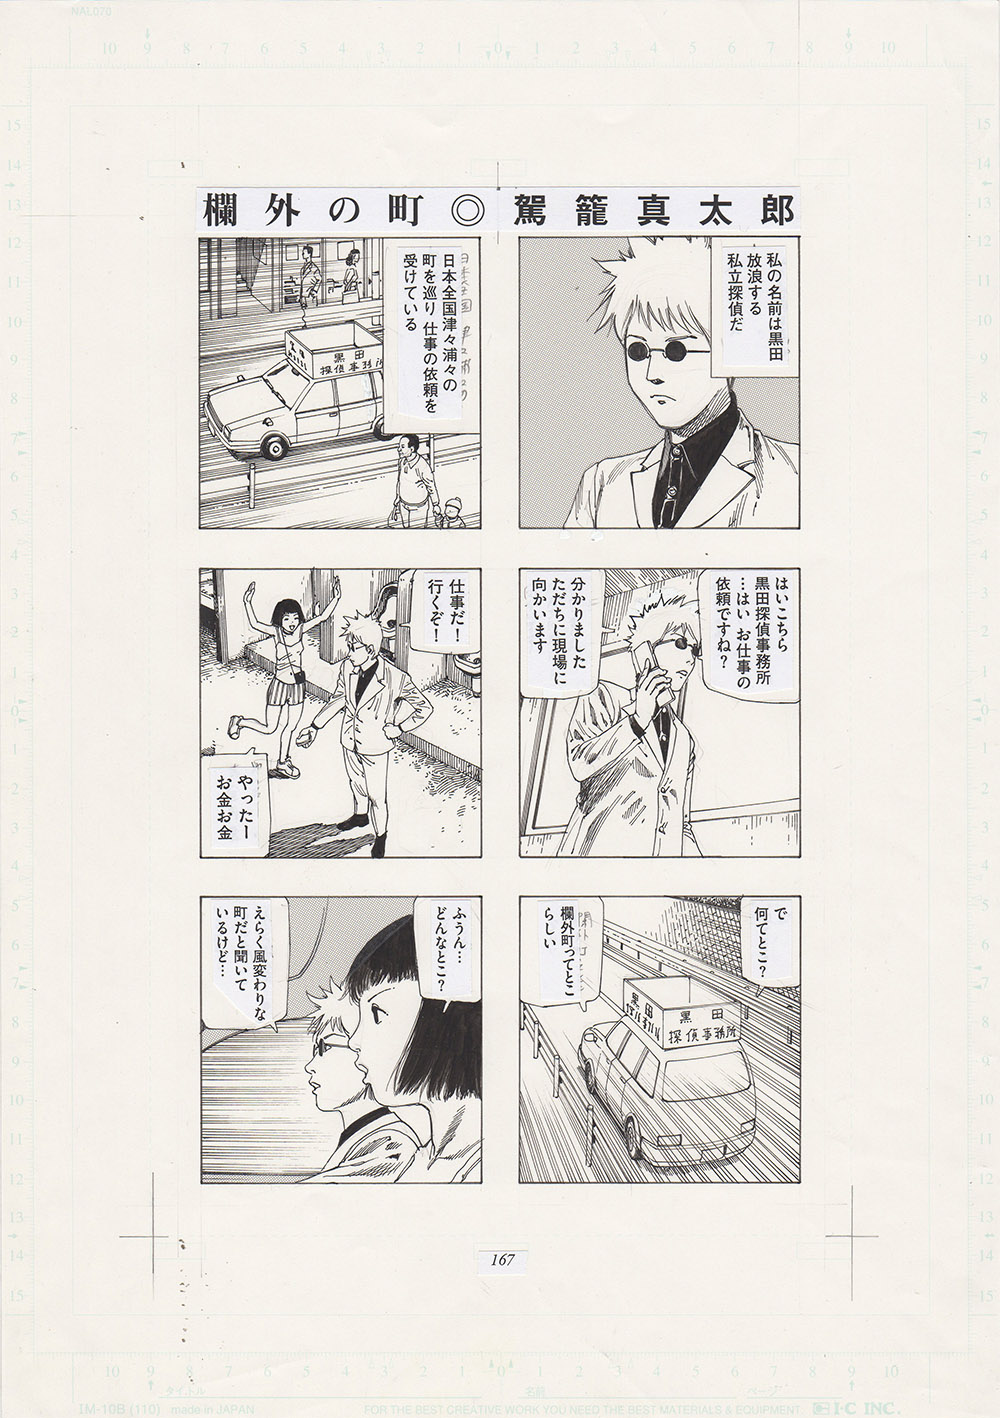 Rangai No Machi (The Town Between Panels) - page 1